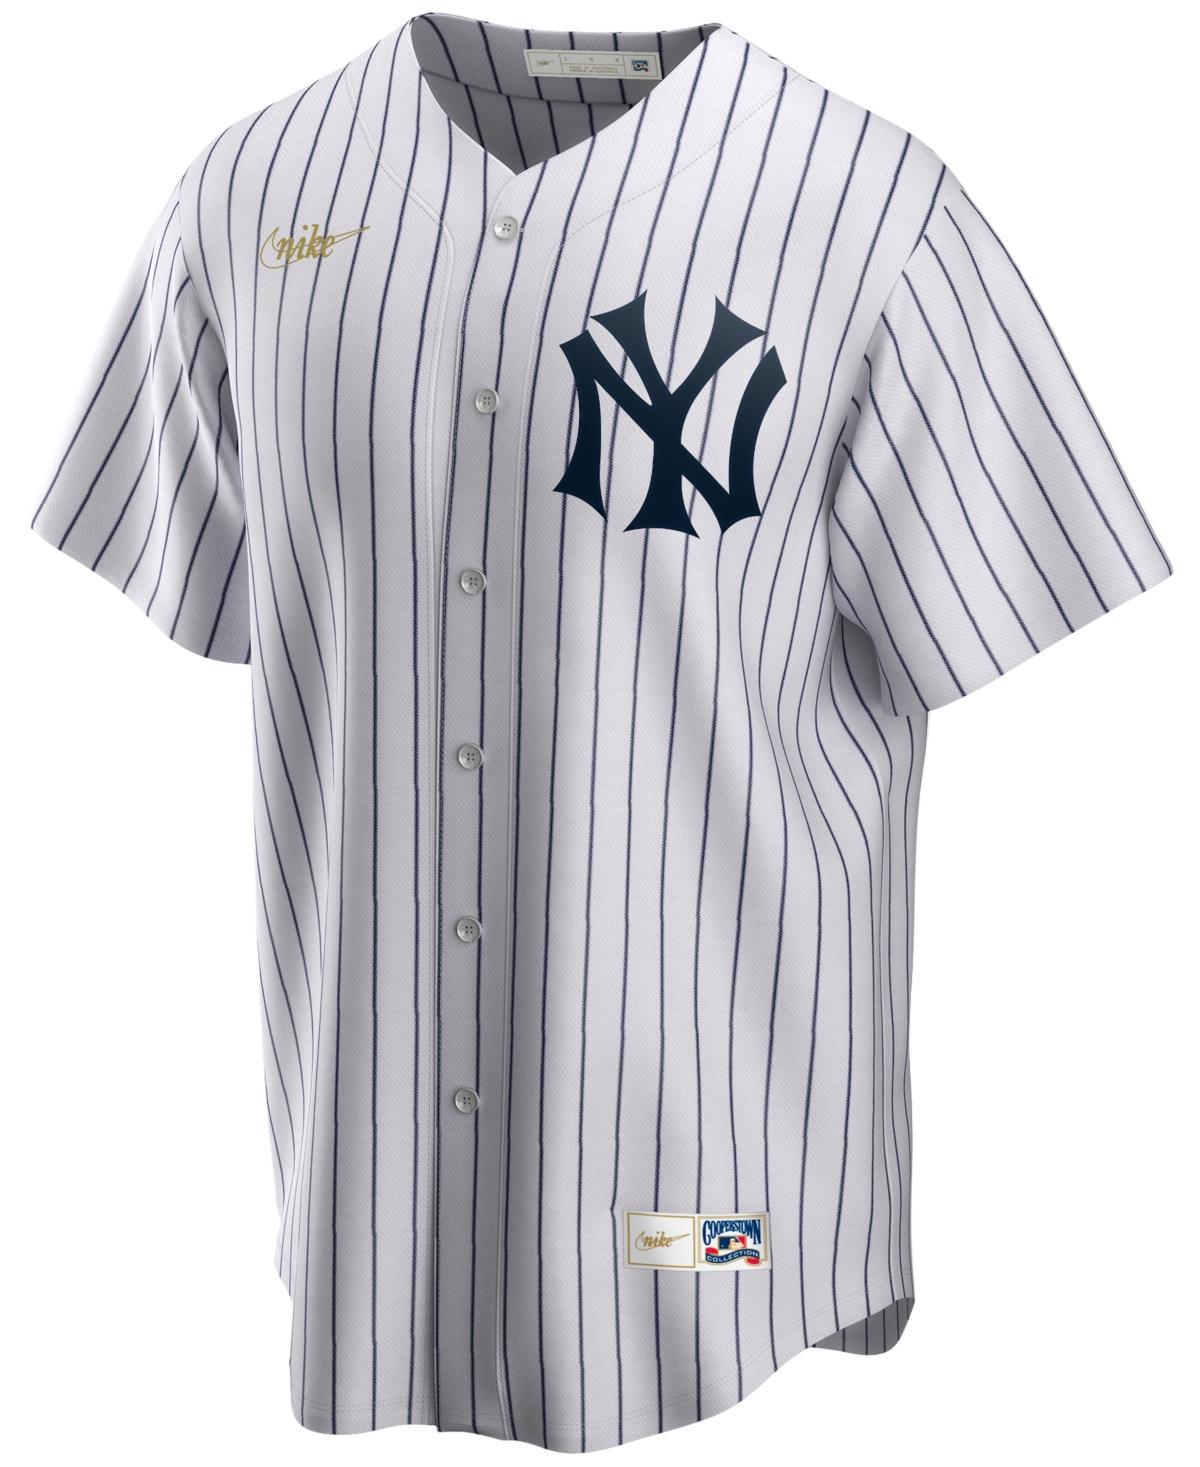 Derek Jeter New York Yankees Nike Home Replica Player Name Jersey -  White/Navy